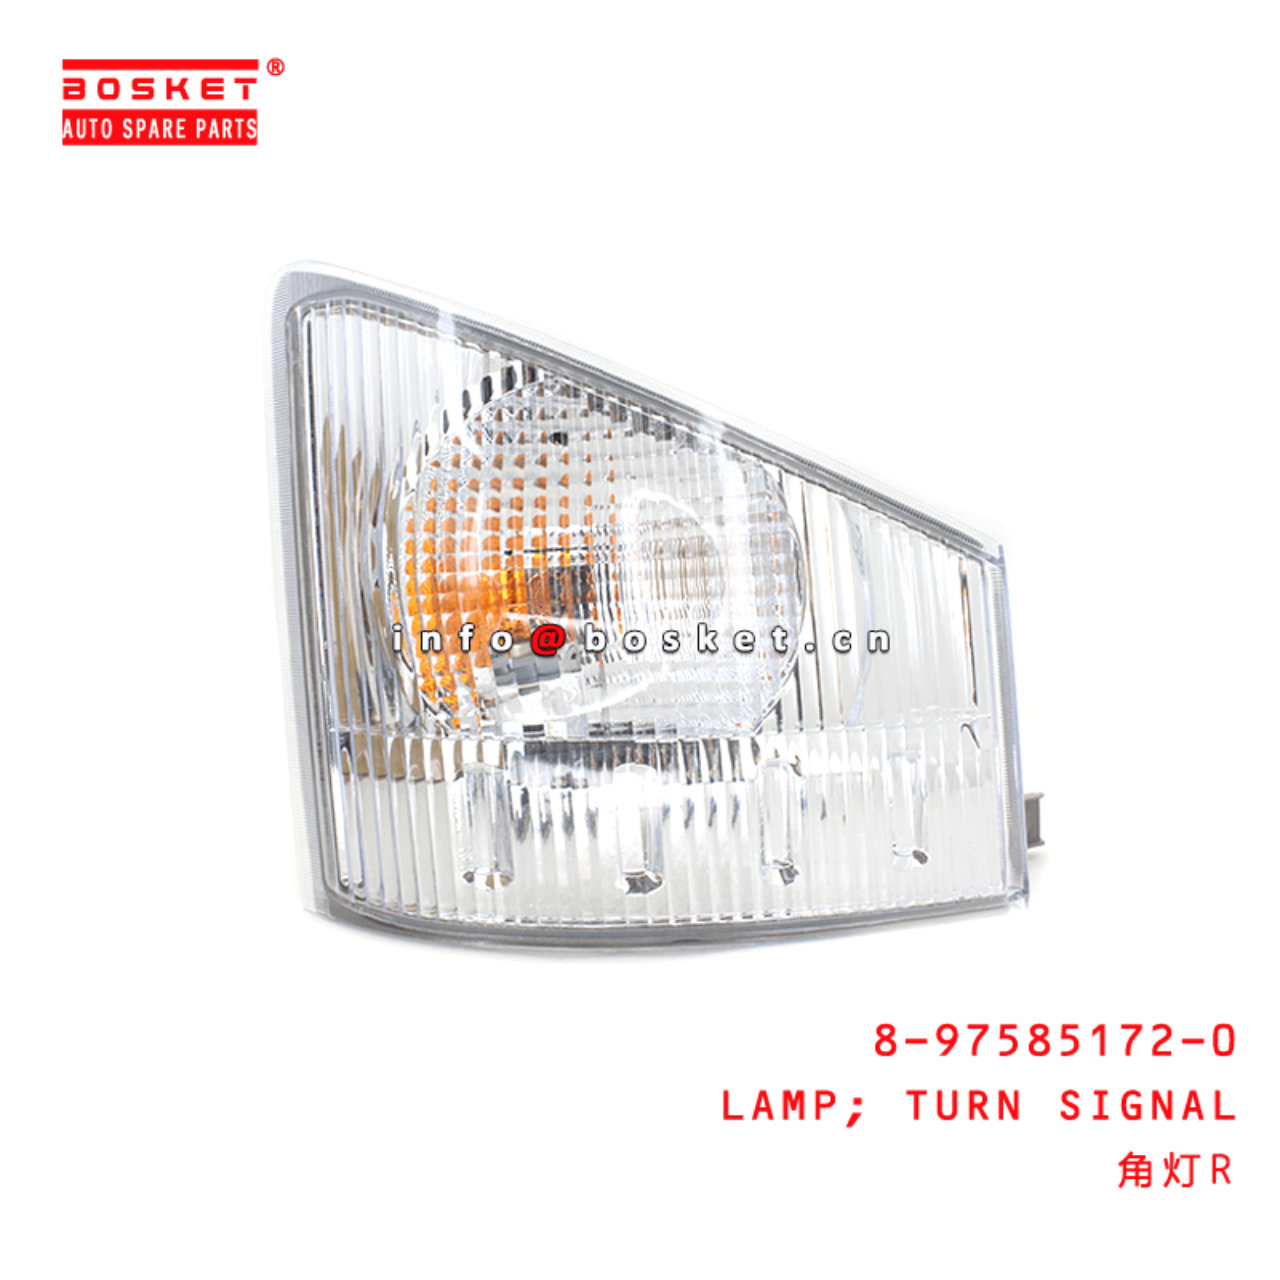 8-97585172-0 Turn Signal Lamp RH8975851720 Suitable for ISUZU 700P